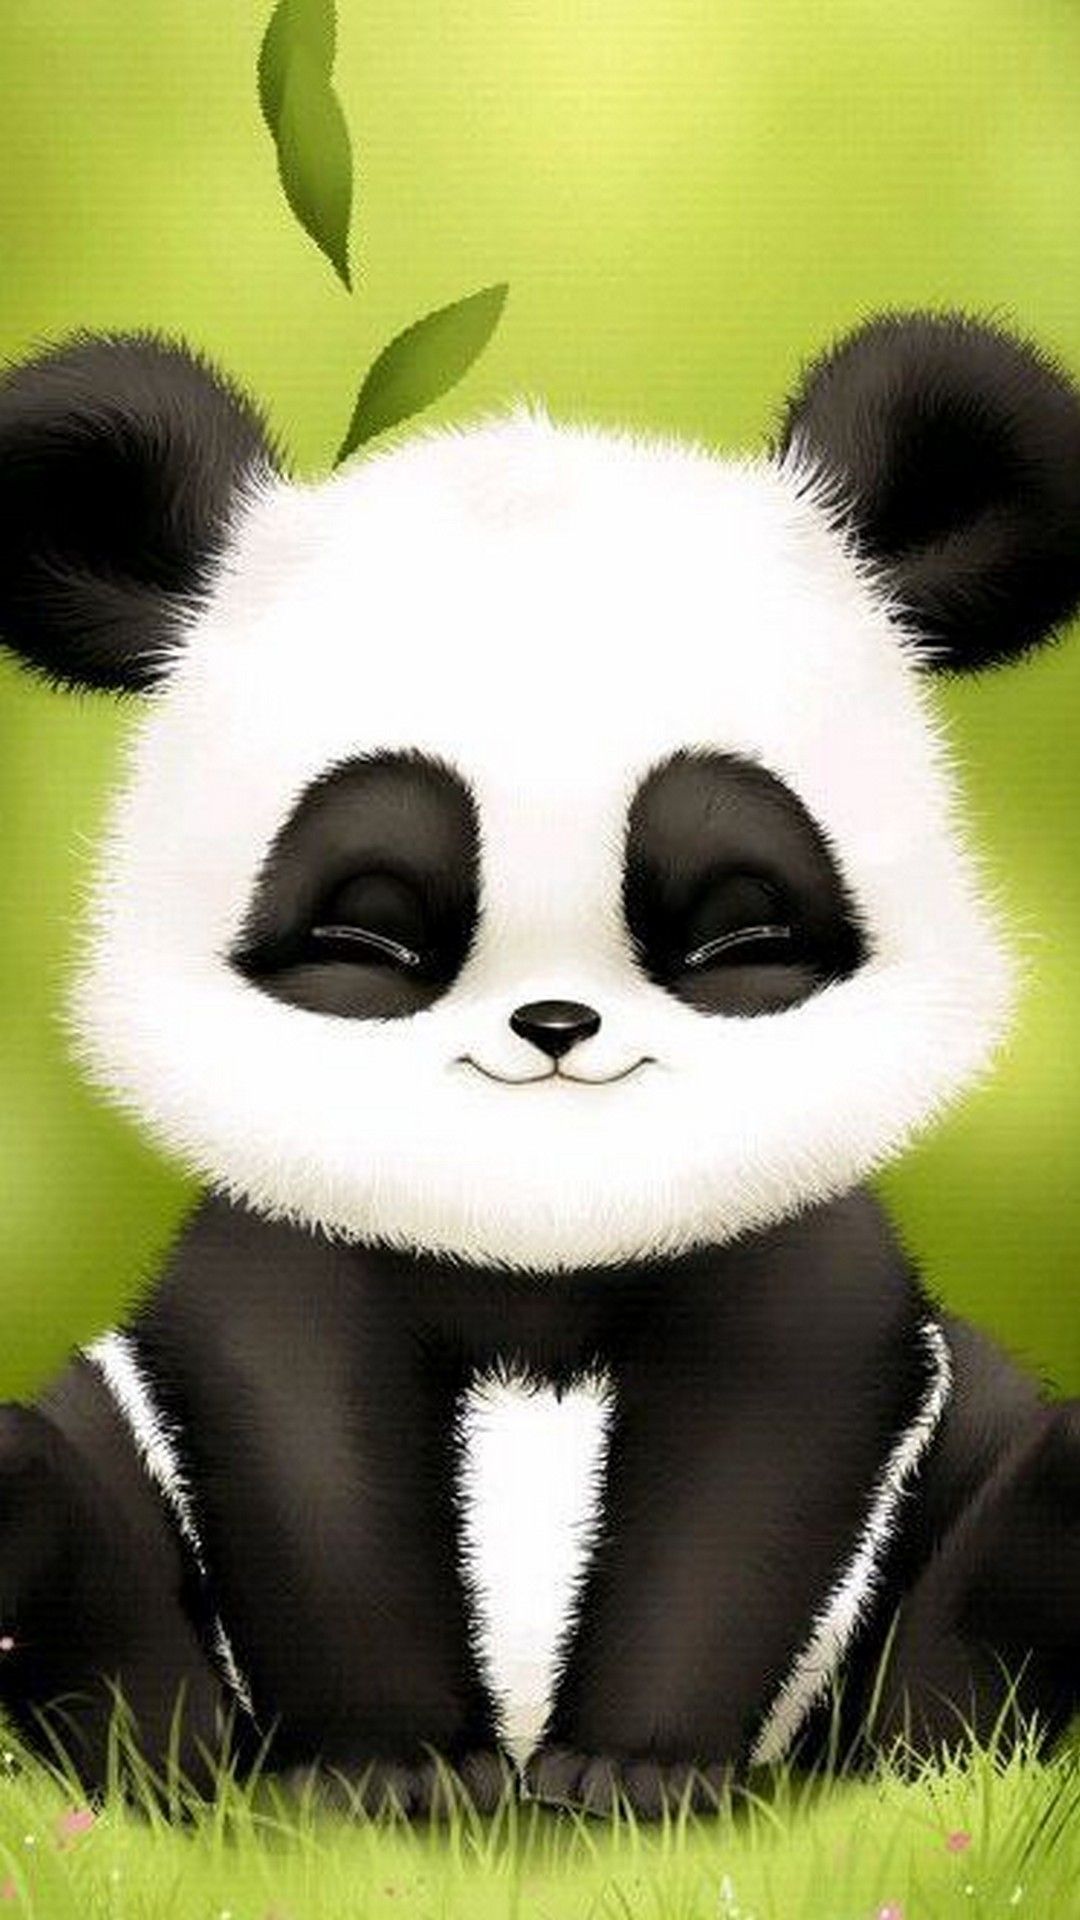 Cute Panda Wallpaper Gifts  Merchandise for Sale  Redbubble